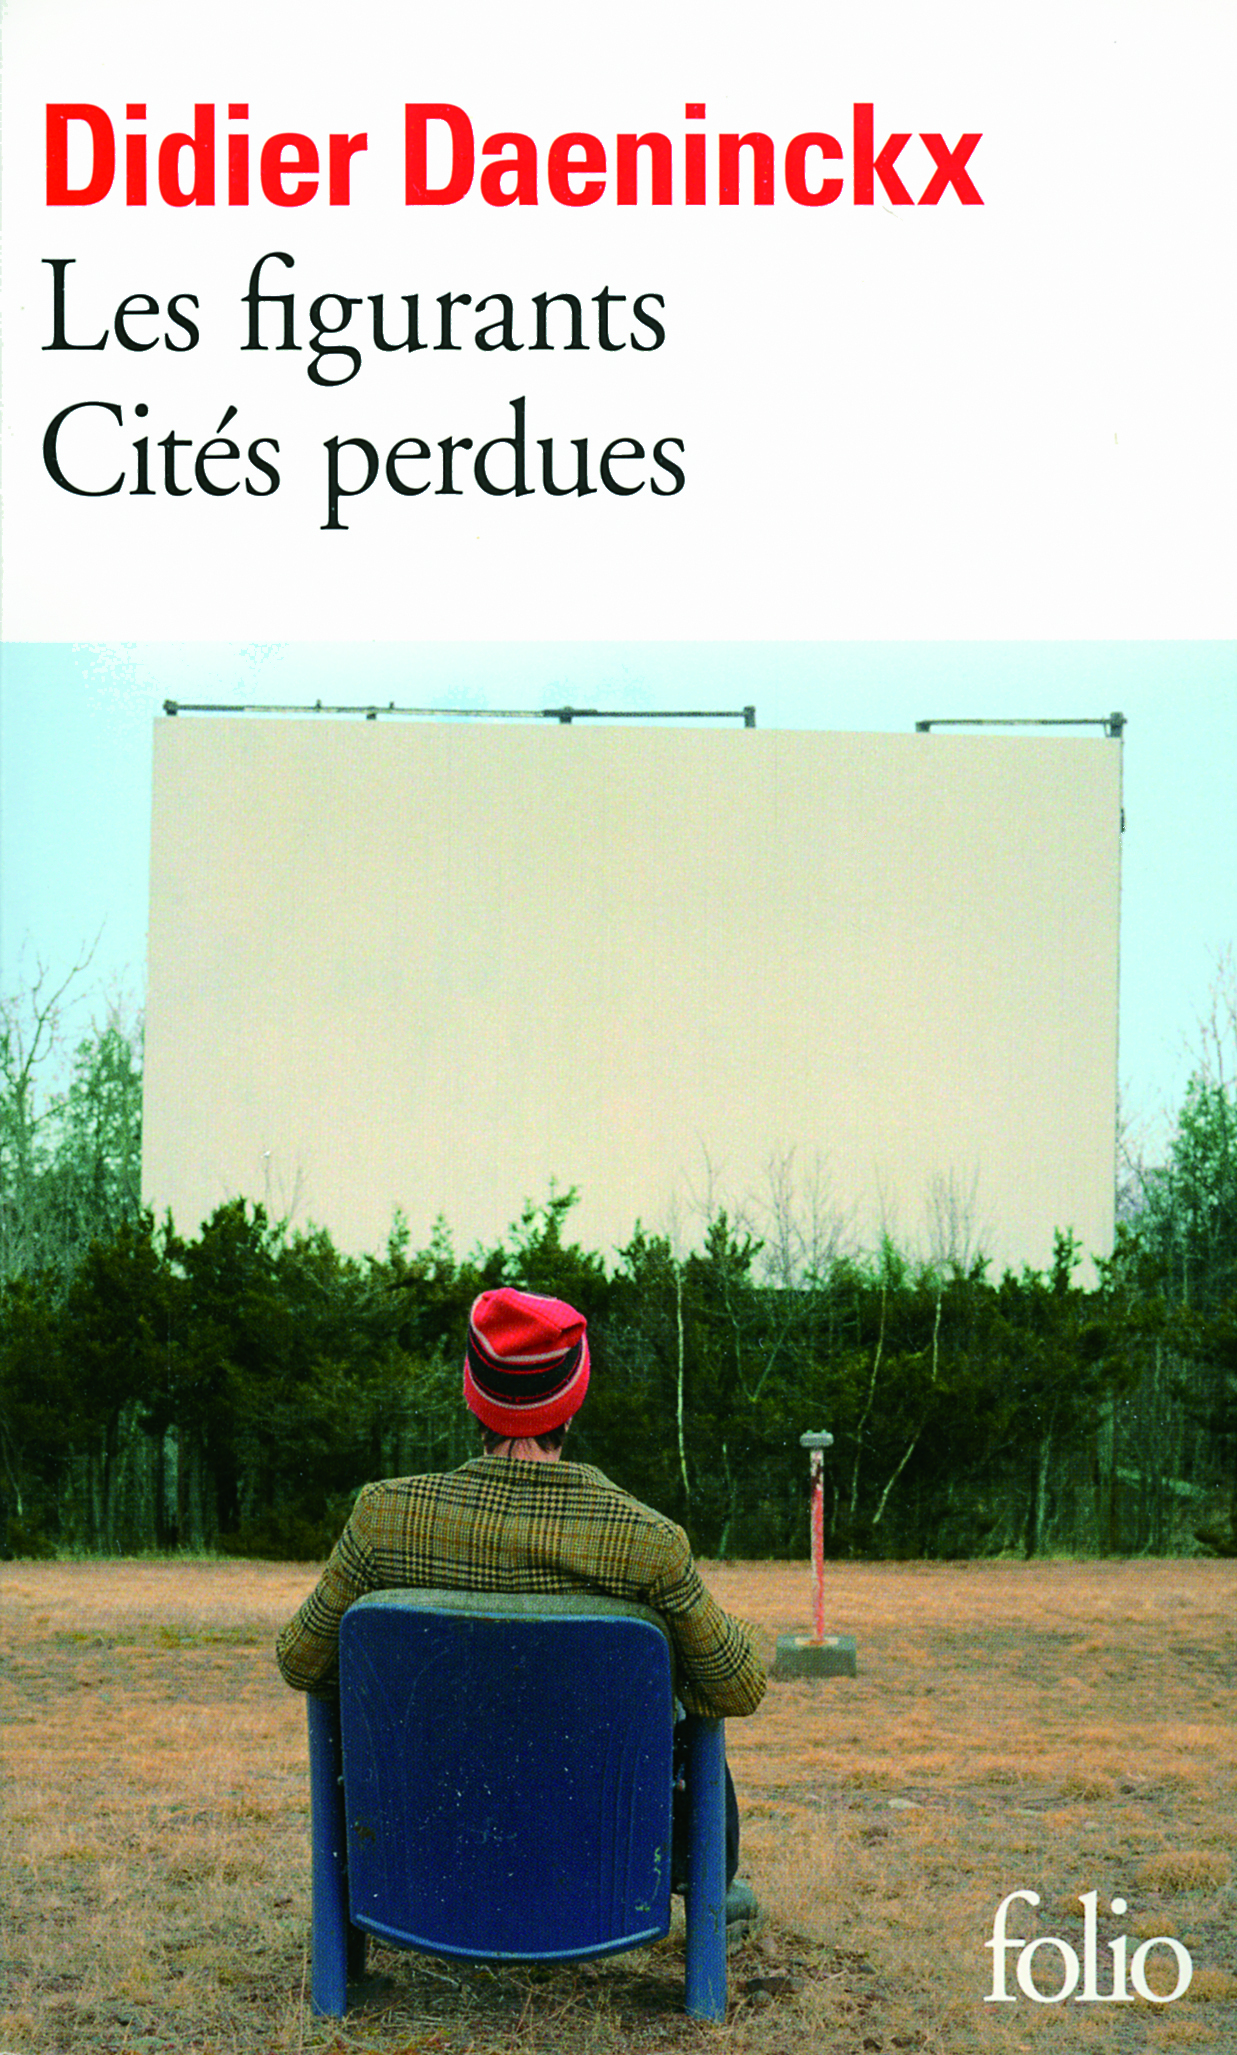 Les figurants - Cités perdues (9782070358885-front-cover)